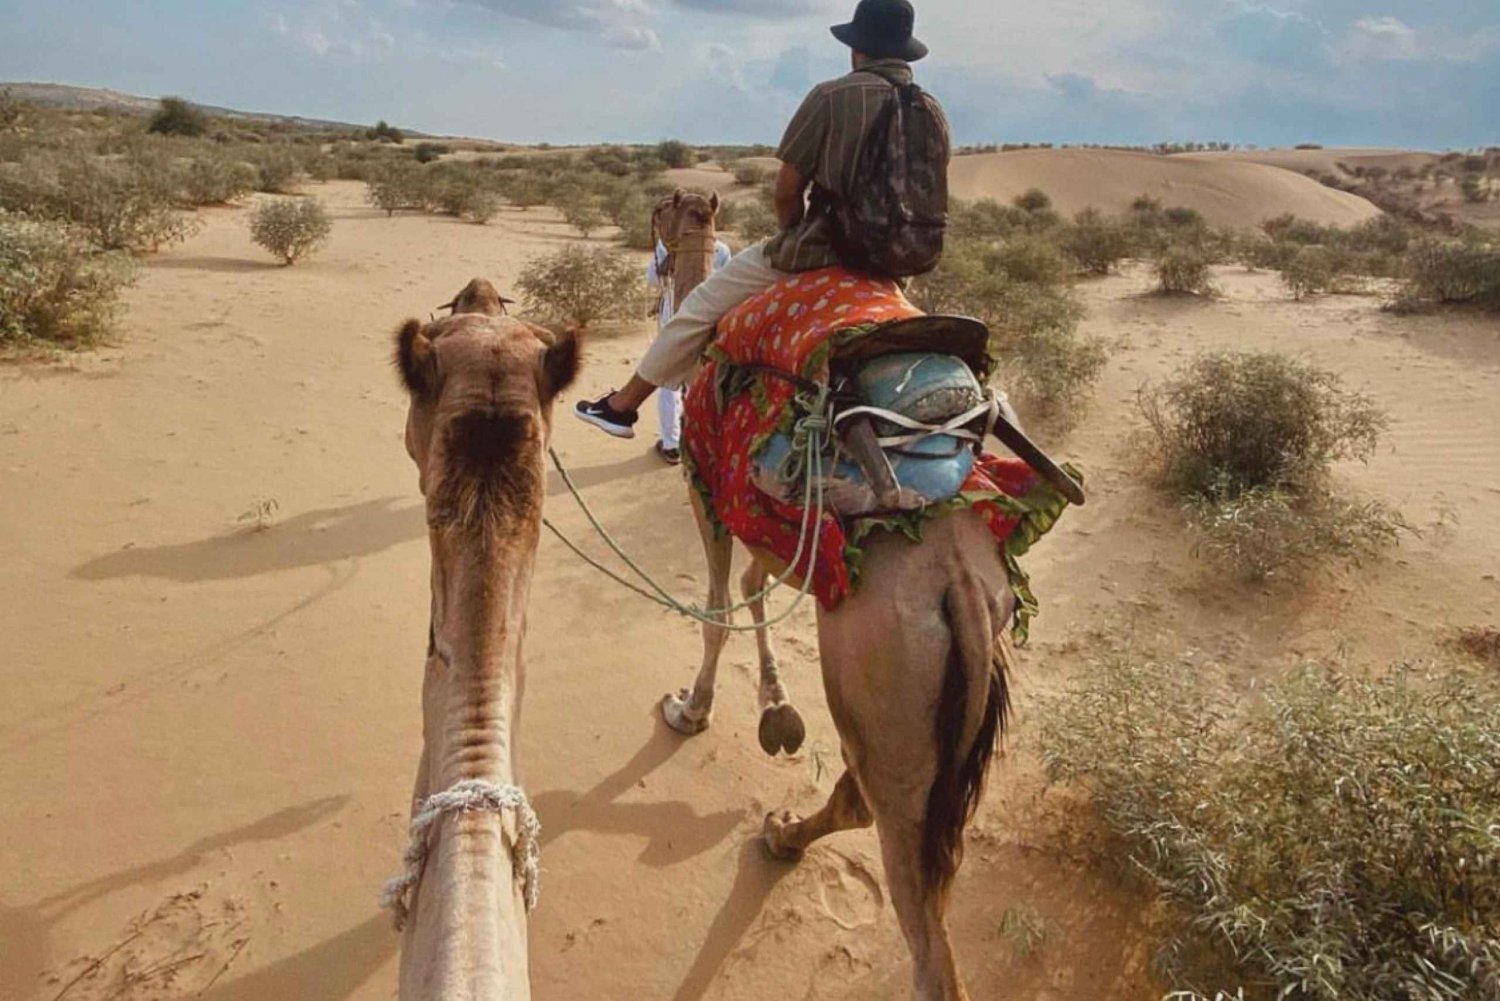 James Desert Experience